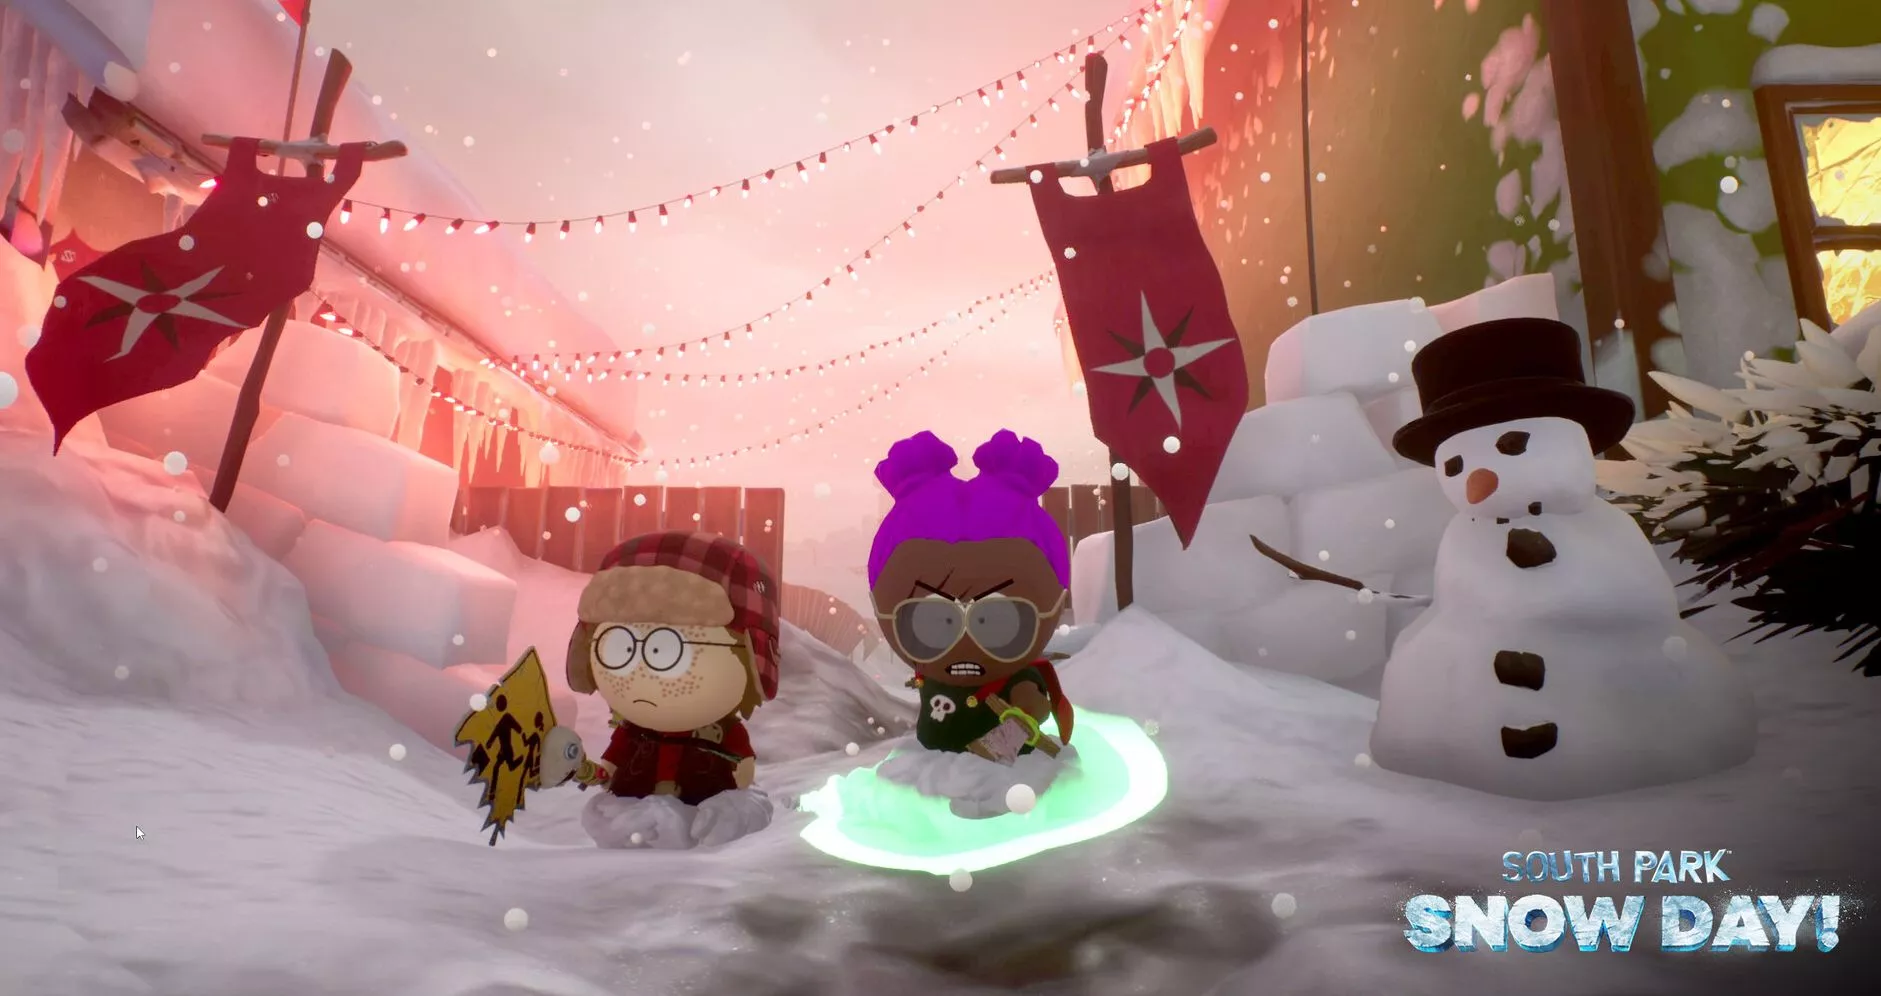 Gameplay-Trailer zu South Park: Snow Day! Heropic